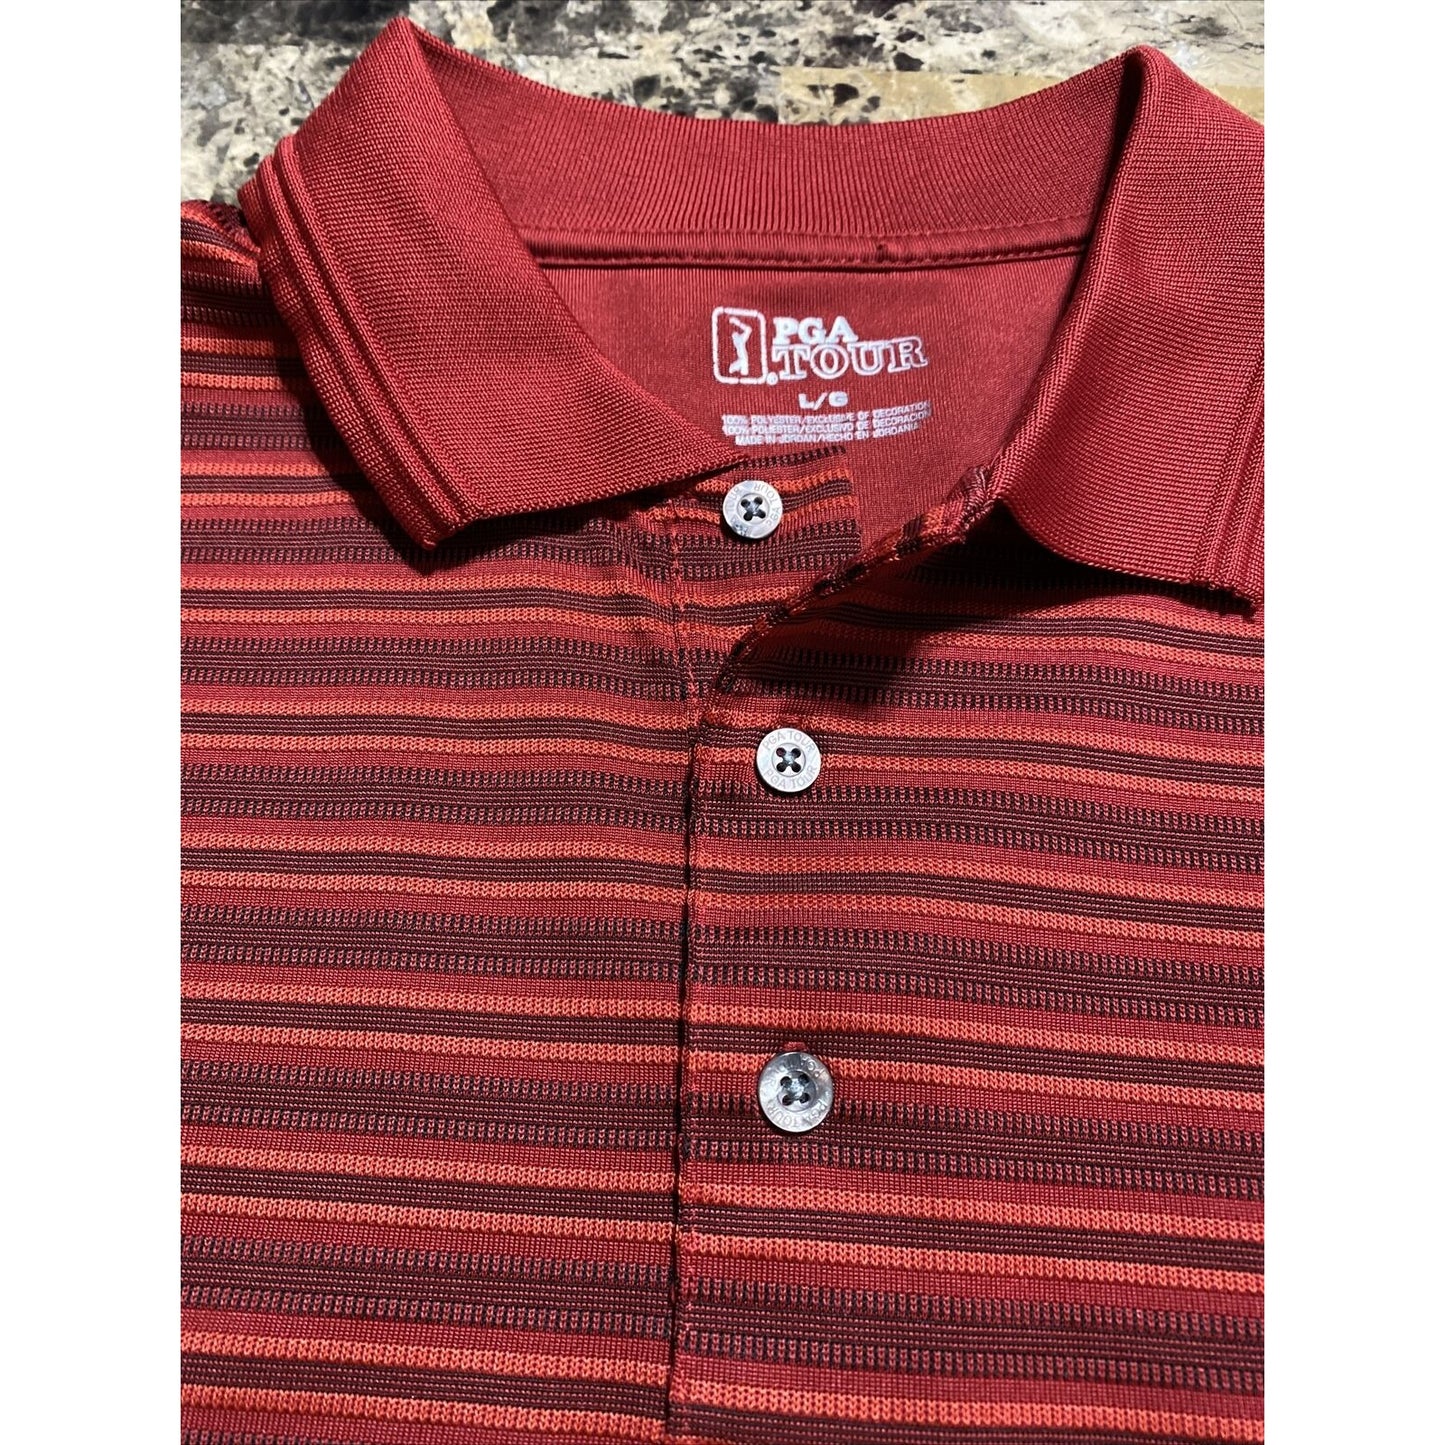 PGA Tour Men’s Large Golf Red Stripes Polyester Polo Shirt